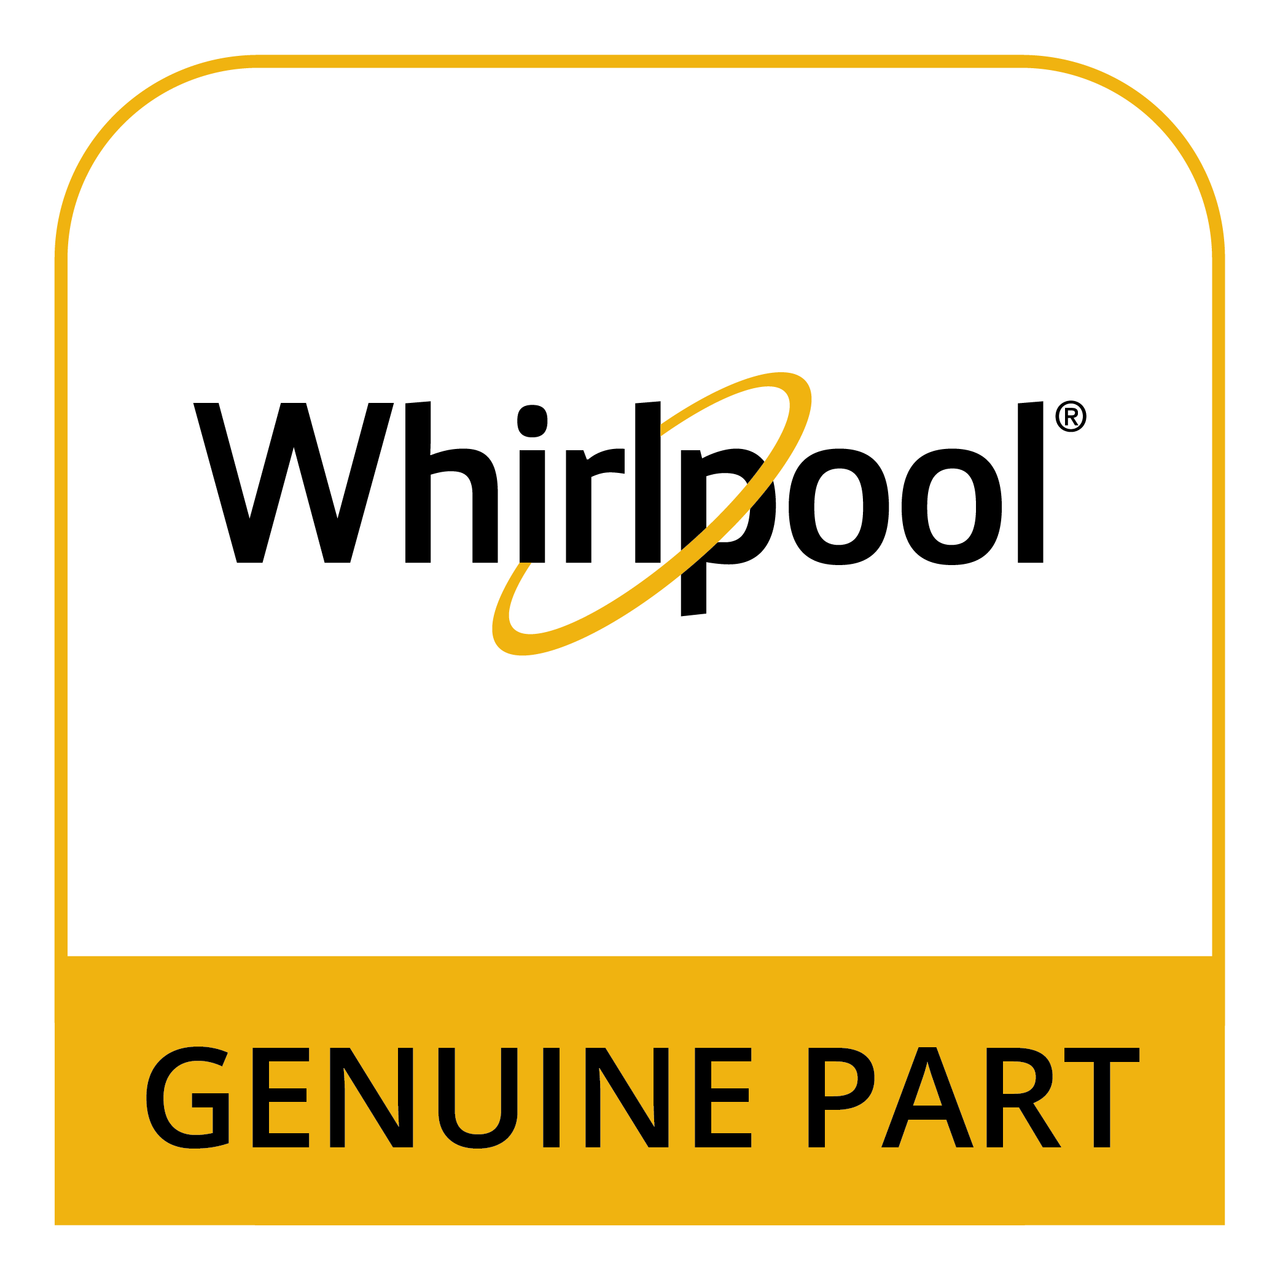 Whirlpool 4344820 - Support - Genuine Part